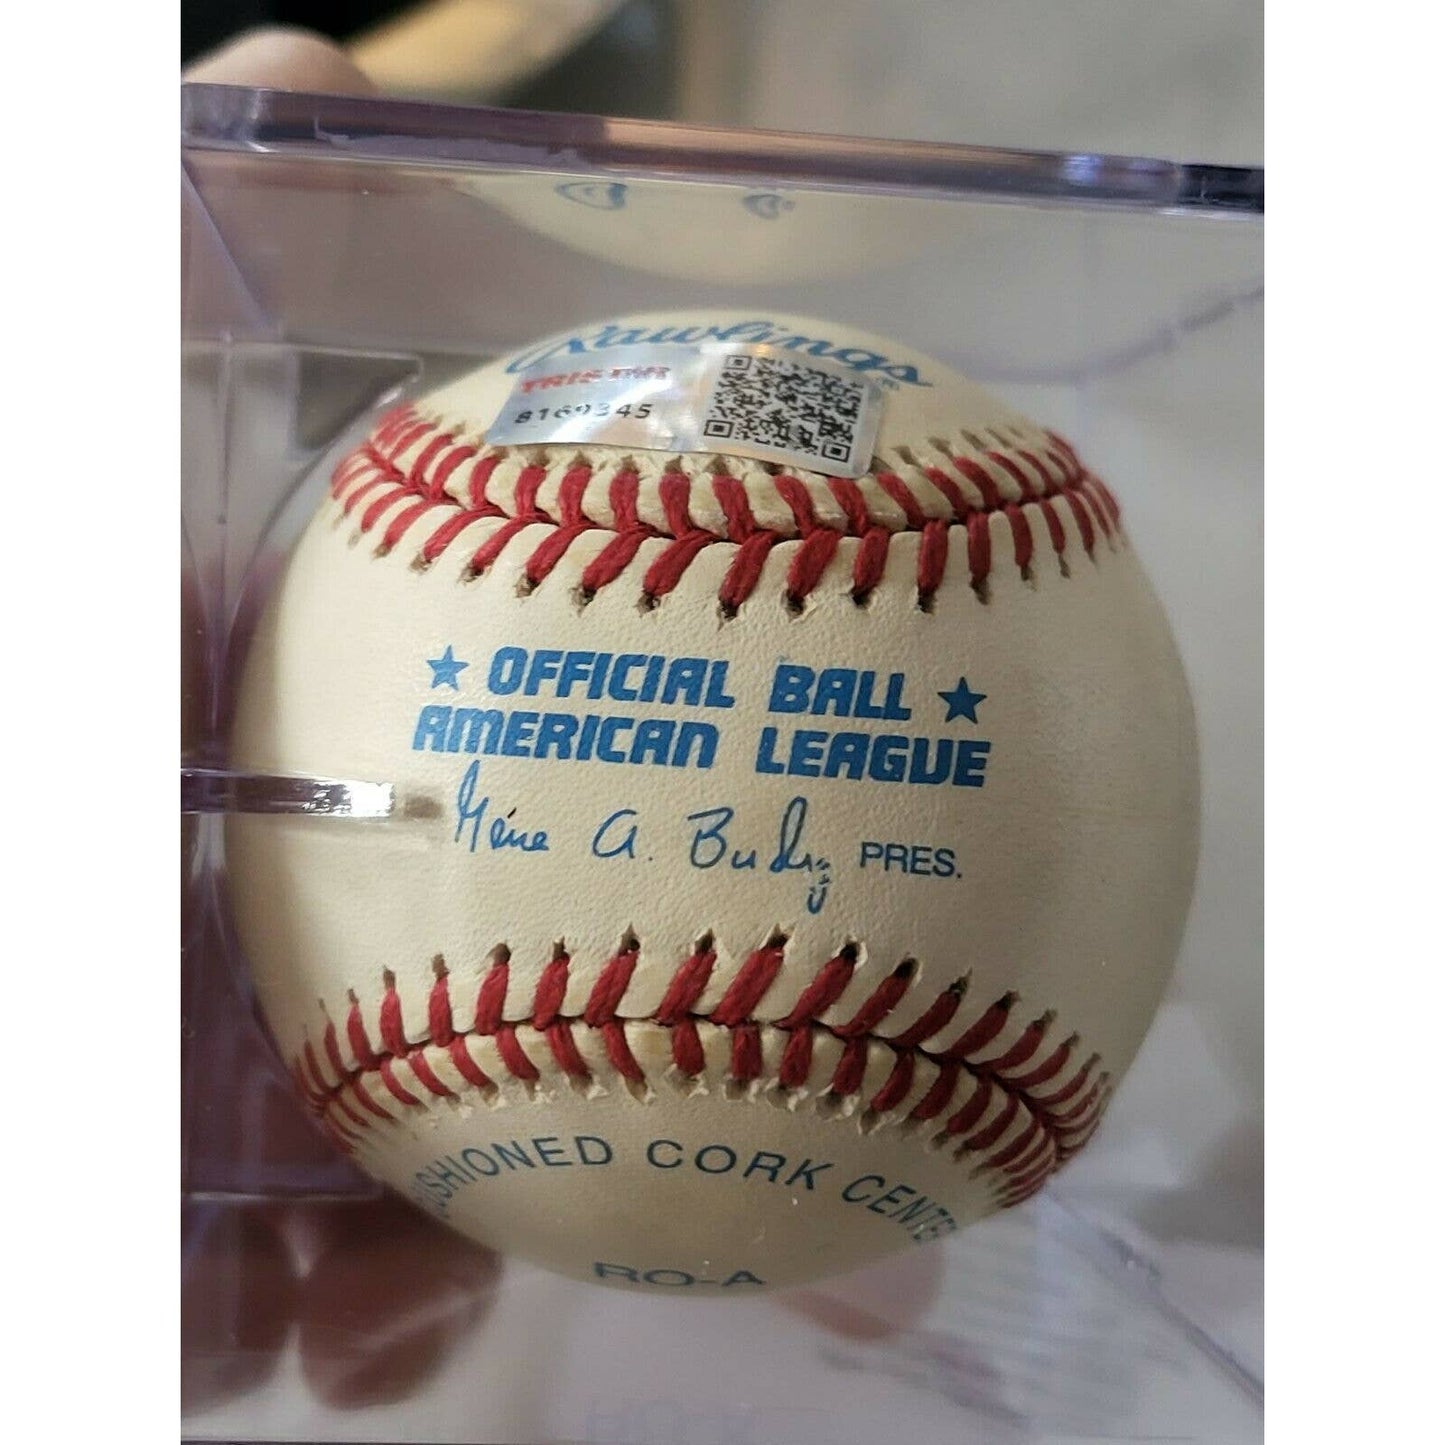 Aaron Small Autographed/Signed Baseball TRISTAR - TreasuresEvolved